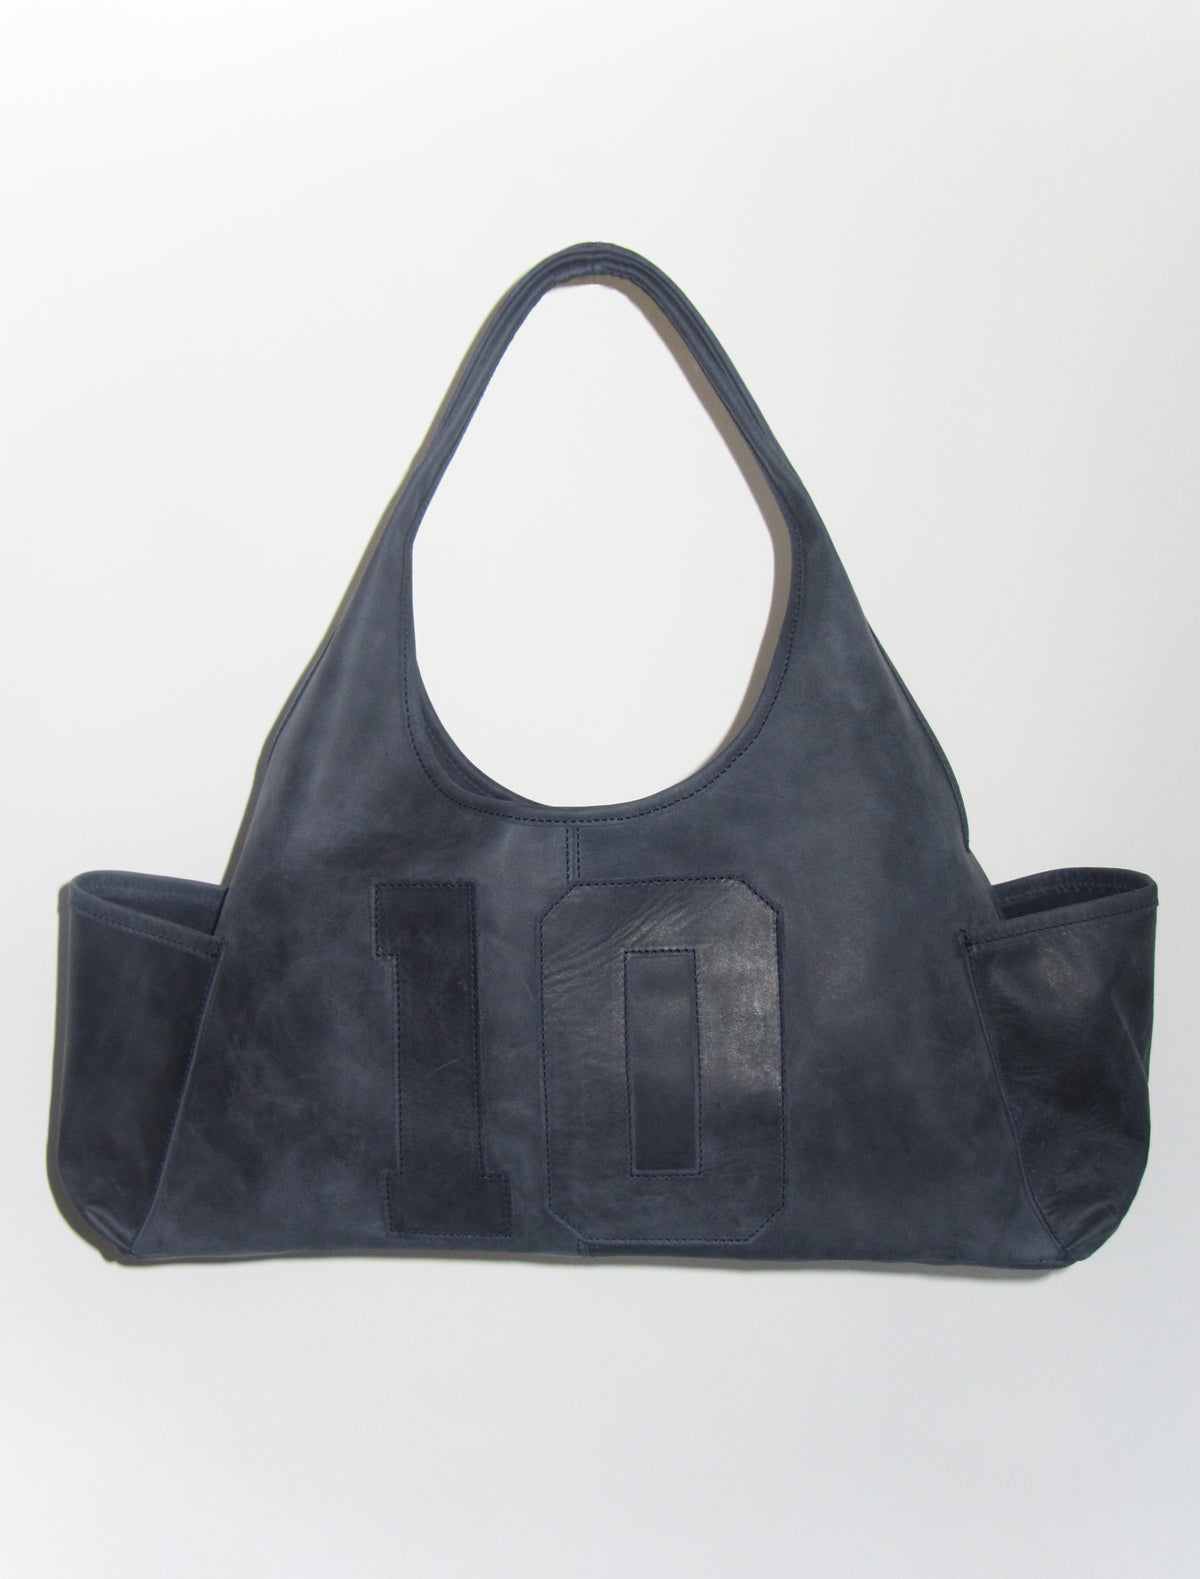 Handbag Leather By J. Jill Size: Medium